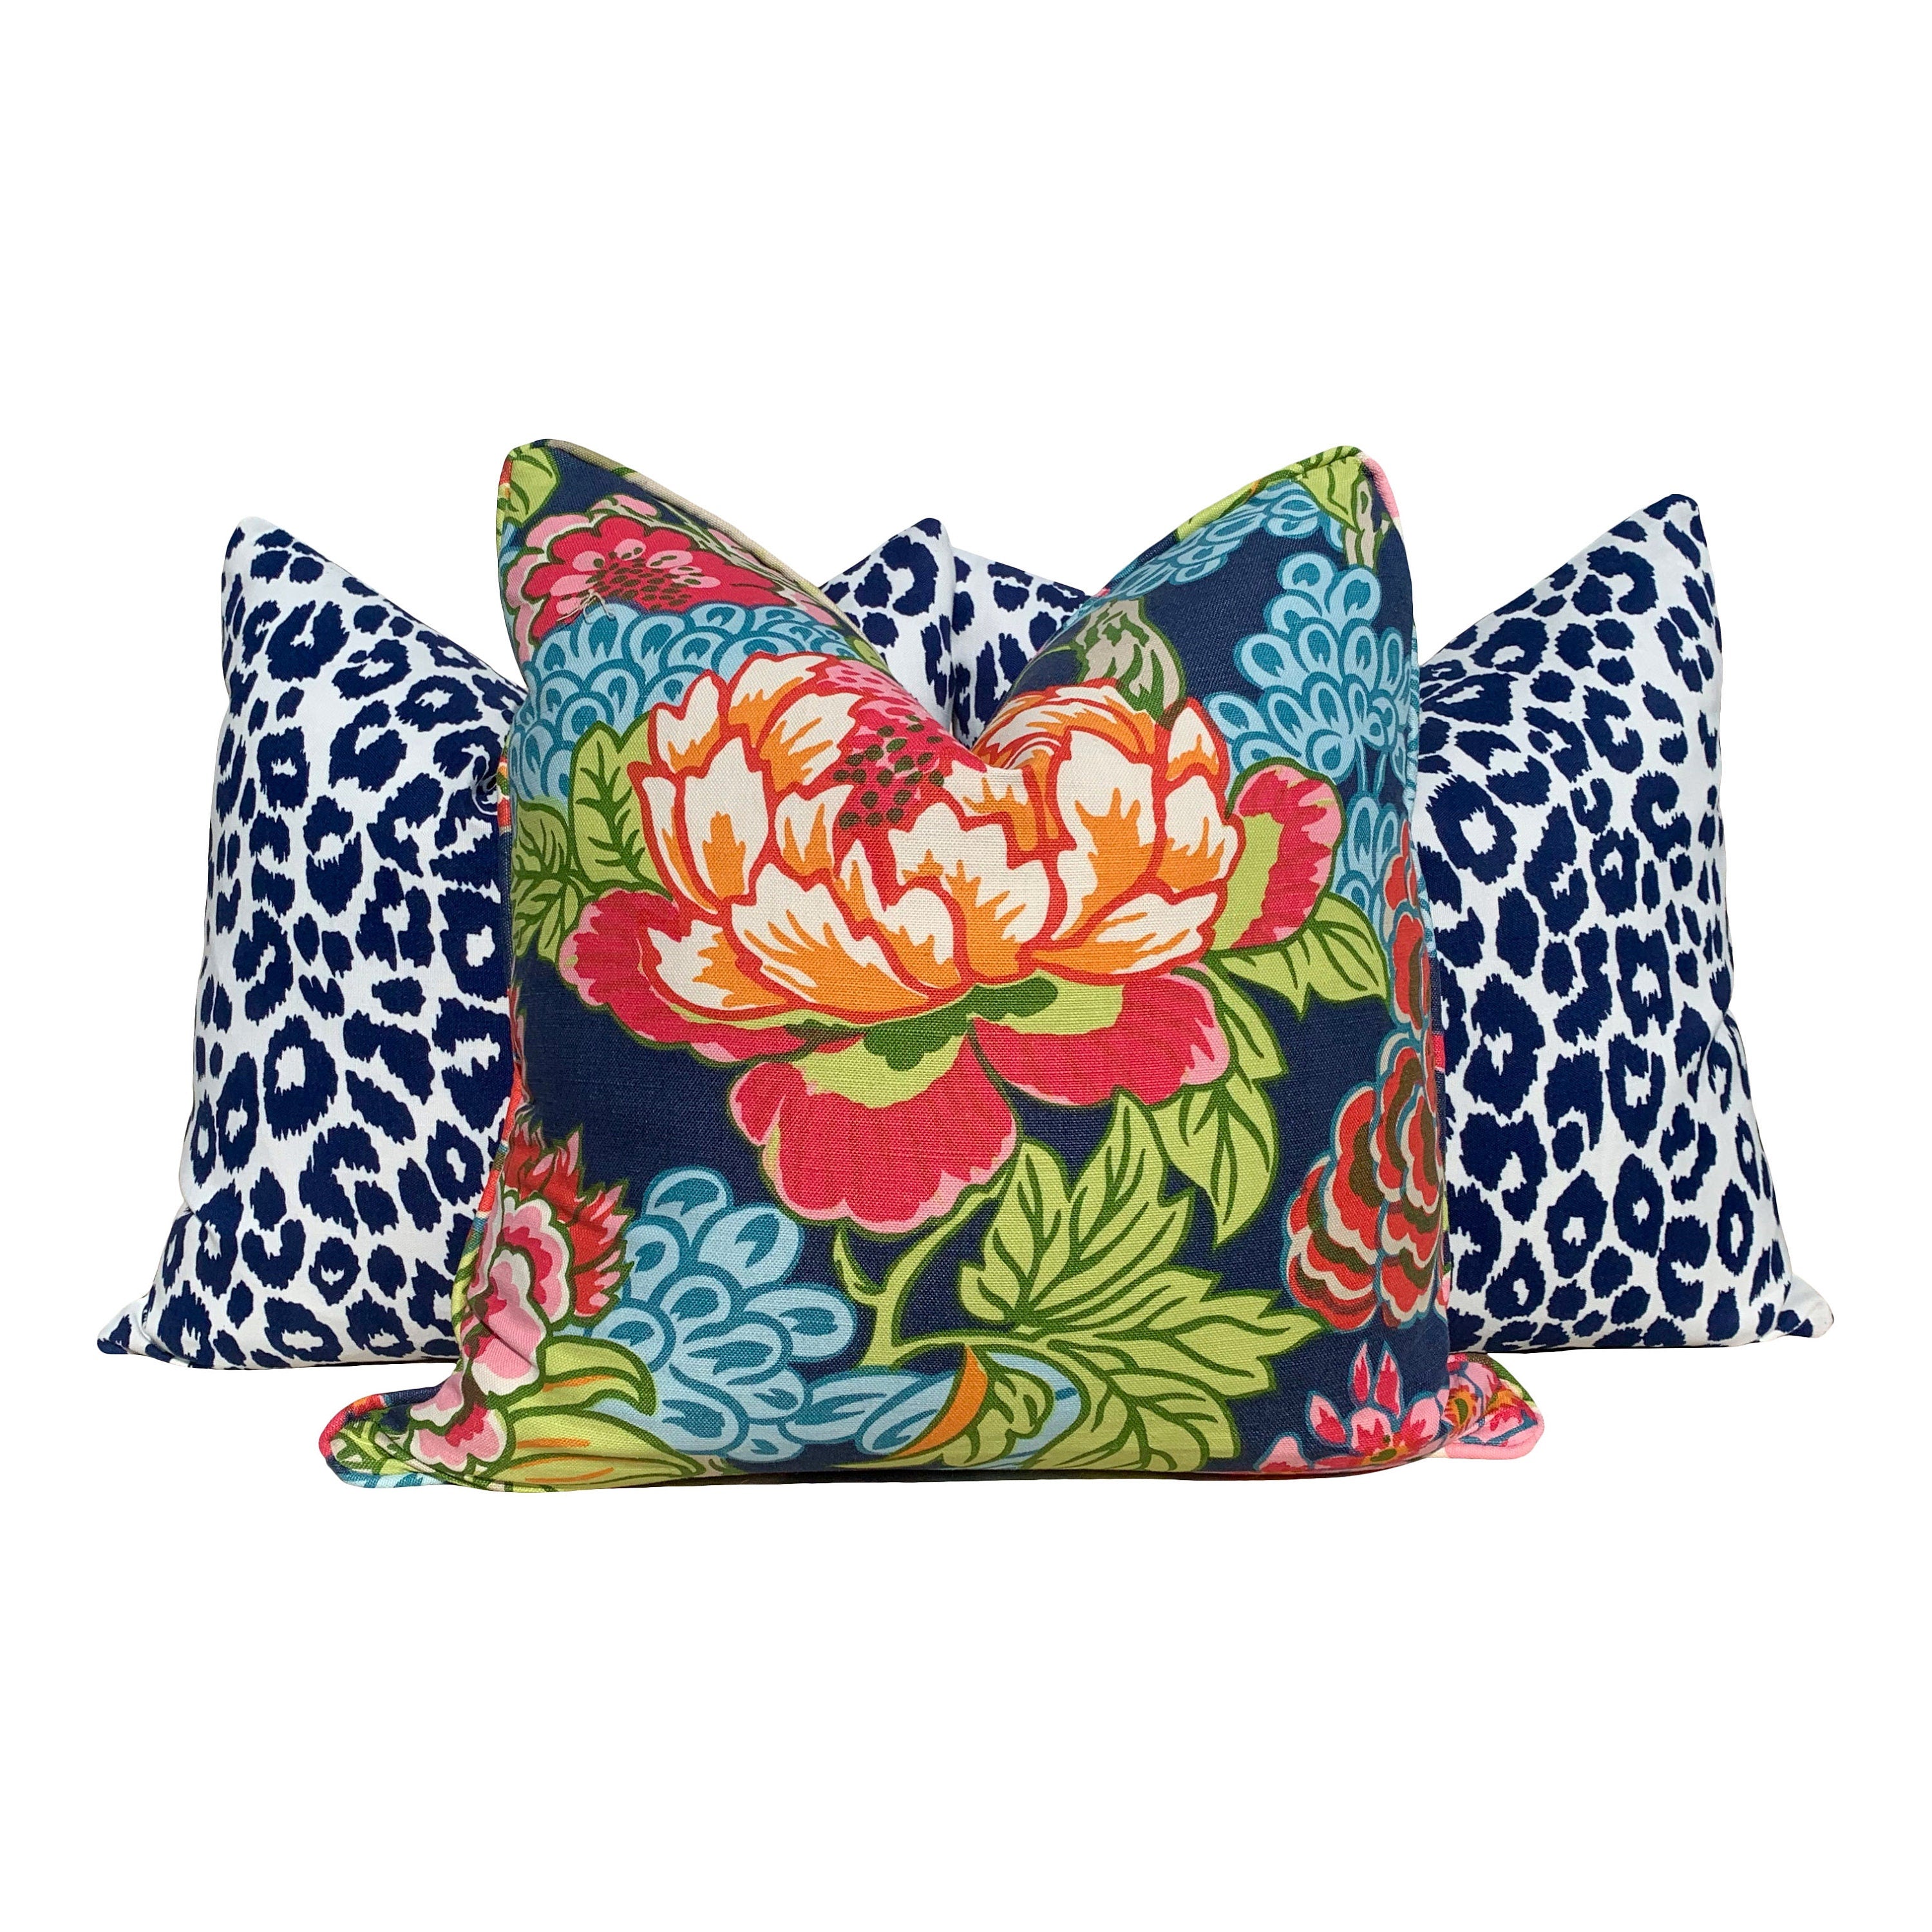 Thibaut Honshu Pillow in Navy Blue. Chinoiserie Floral Pillow. Lumbar Pillow. Designer pillow, accent pillow cover, high end cushion